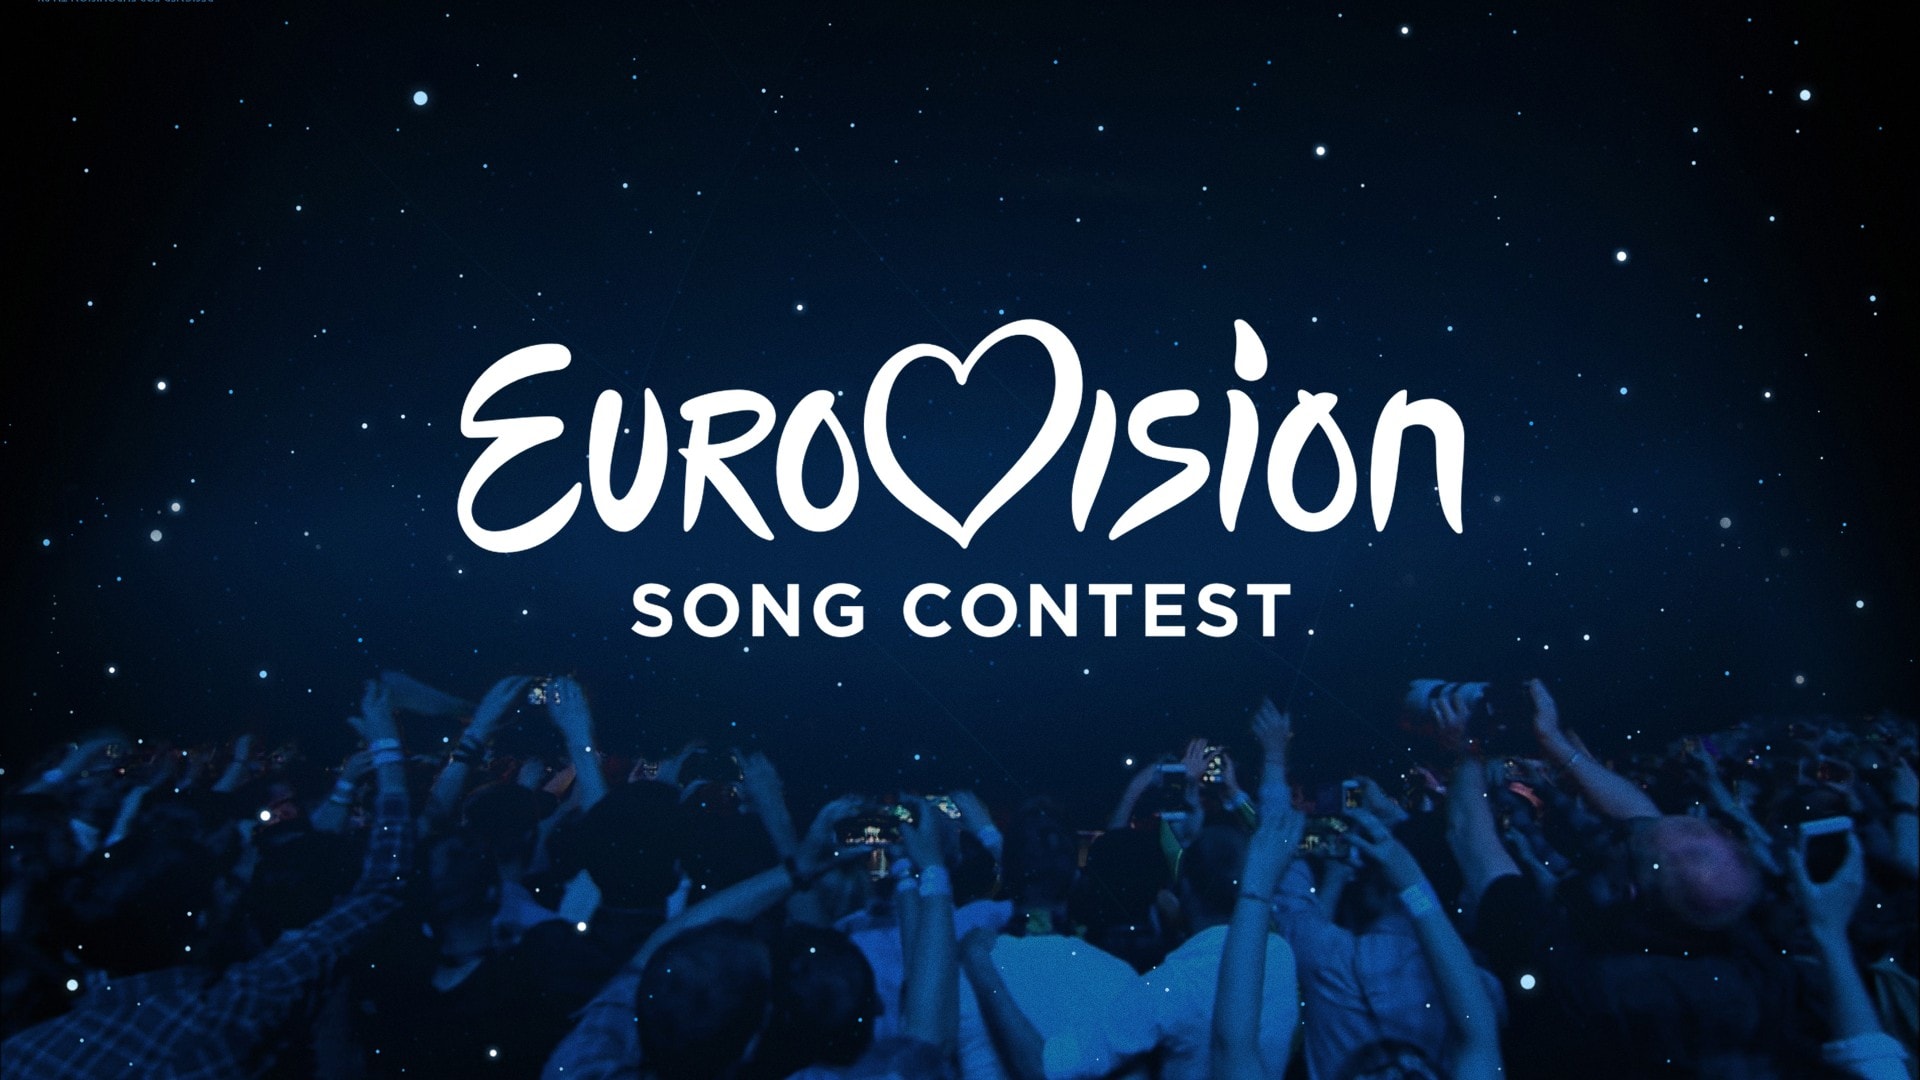 Eurovision Song Contest Eurovision Song Contest 2015 NRK TV